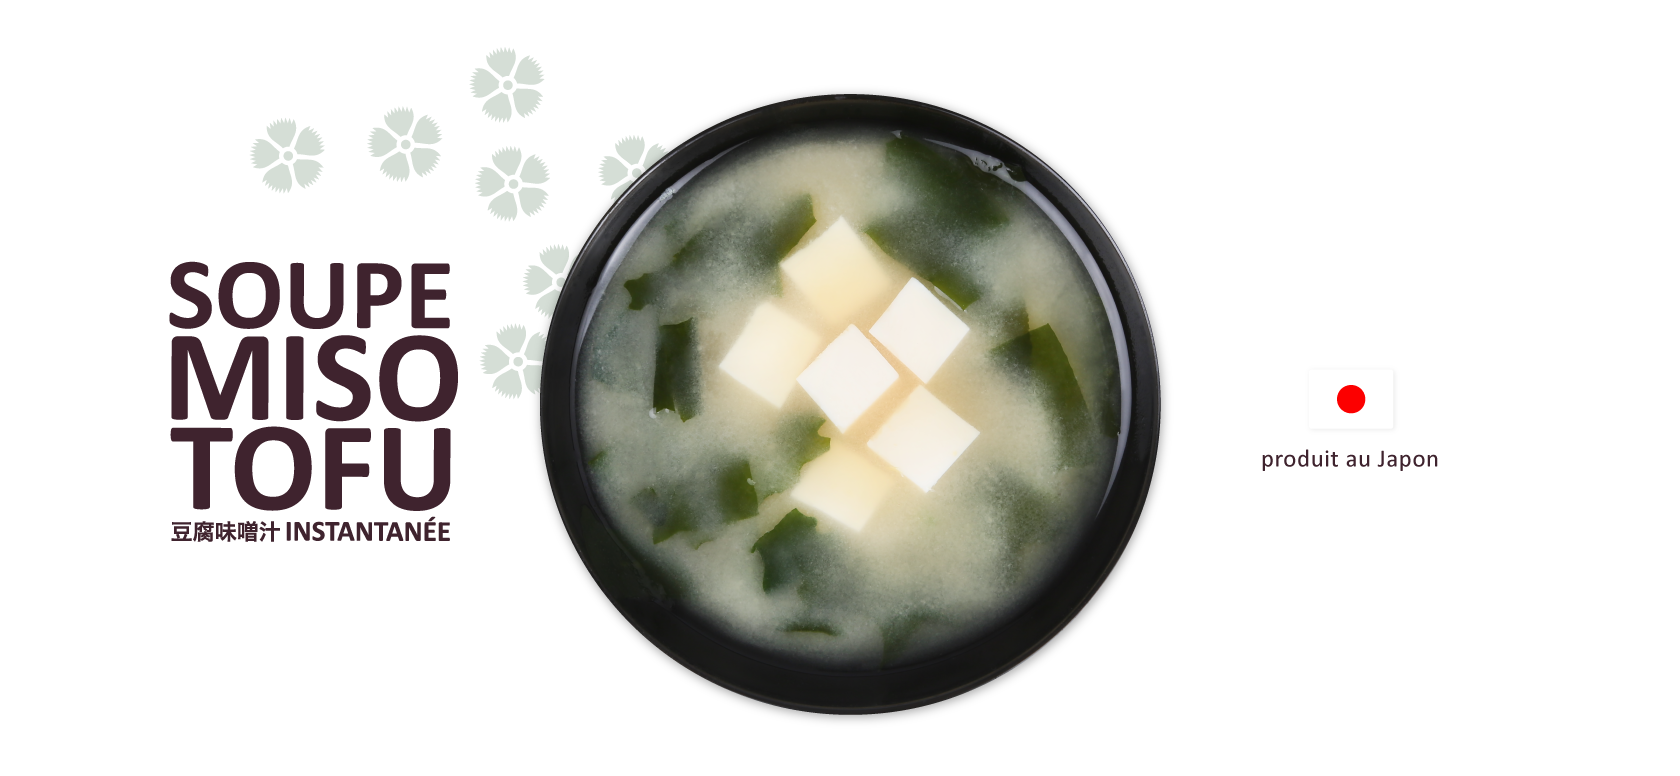 //www.hikarimiso.fr/app/uploads/2016/05/banniere-soupe-miso-0516.png